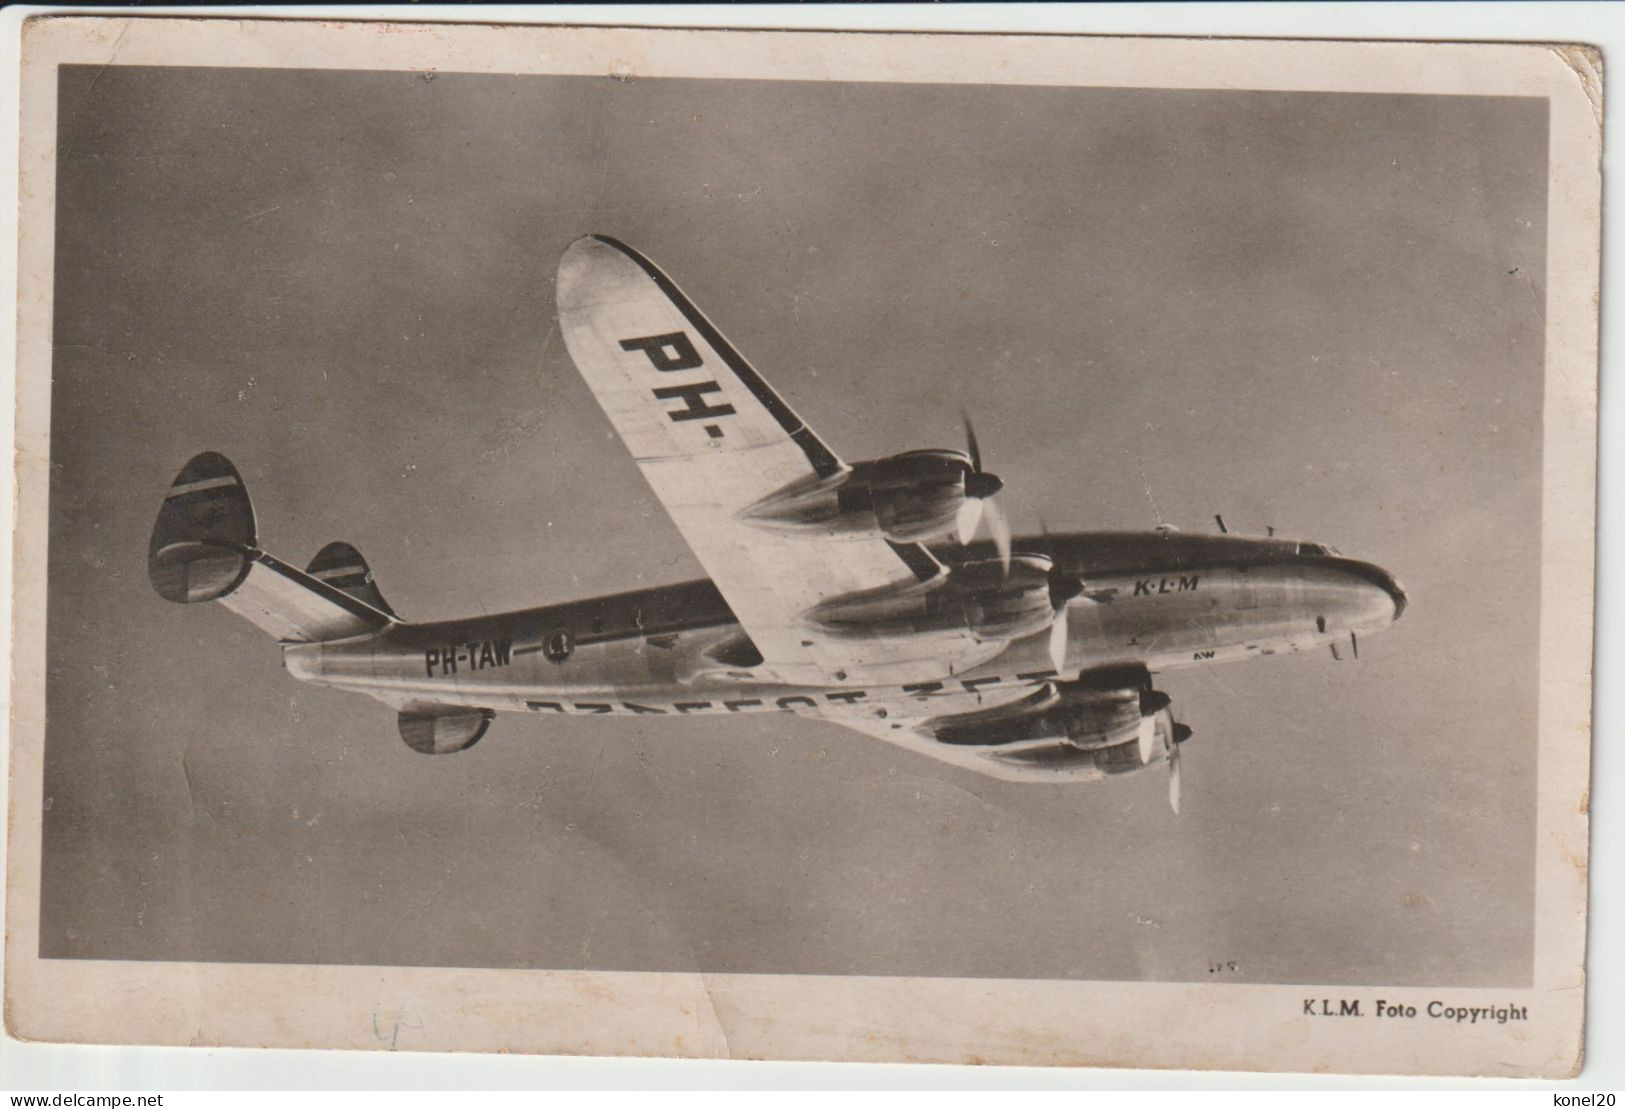 Vintage Rppc KLM K.L.M Royal Dutch Airlines Lockheed Constellation L-049 Aircraft - 1919-1938: Between Wars